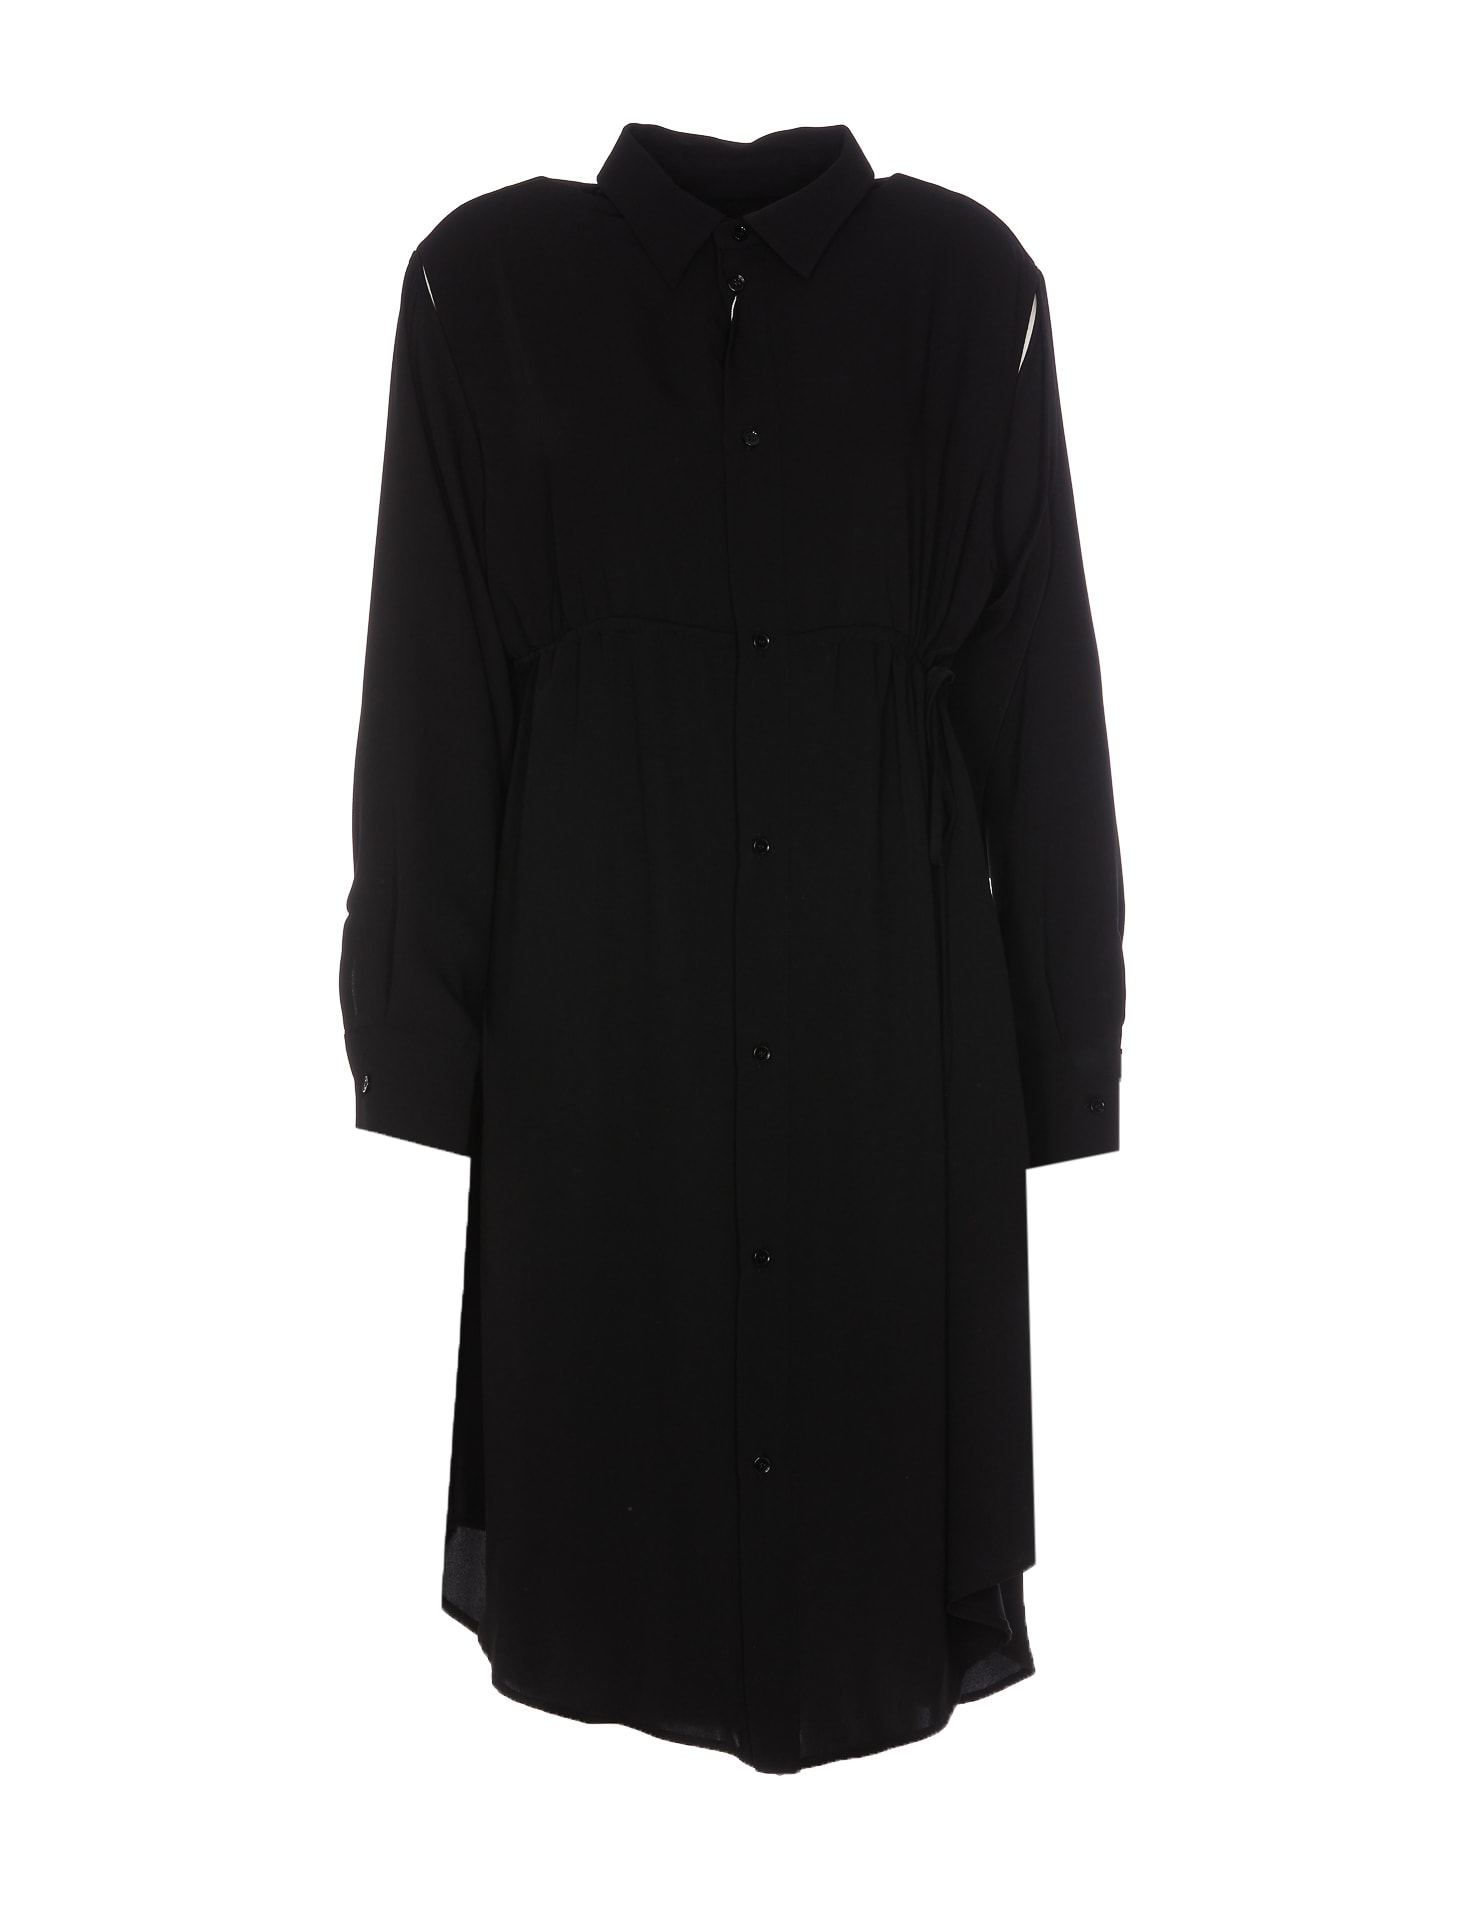 Mm6 Maison Margiela Shirt Dress In Black